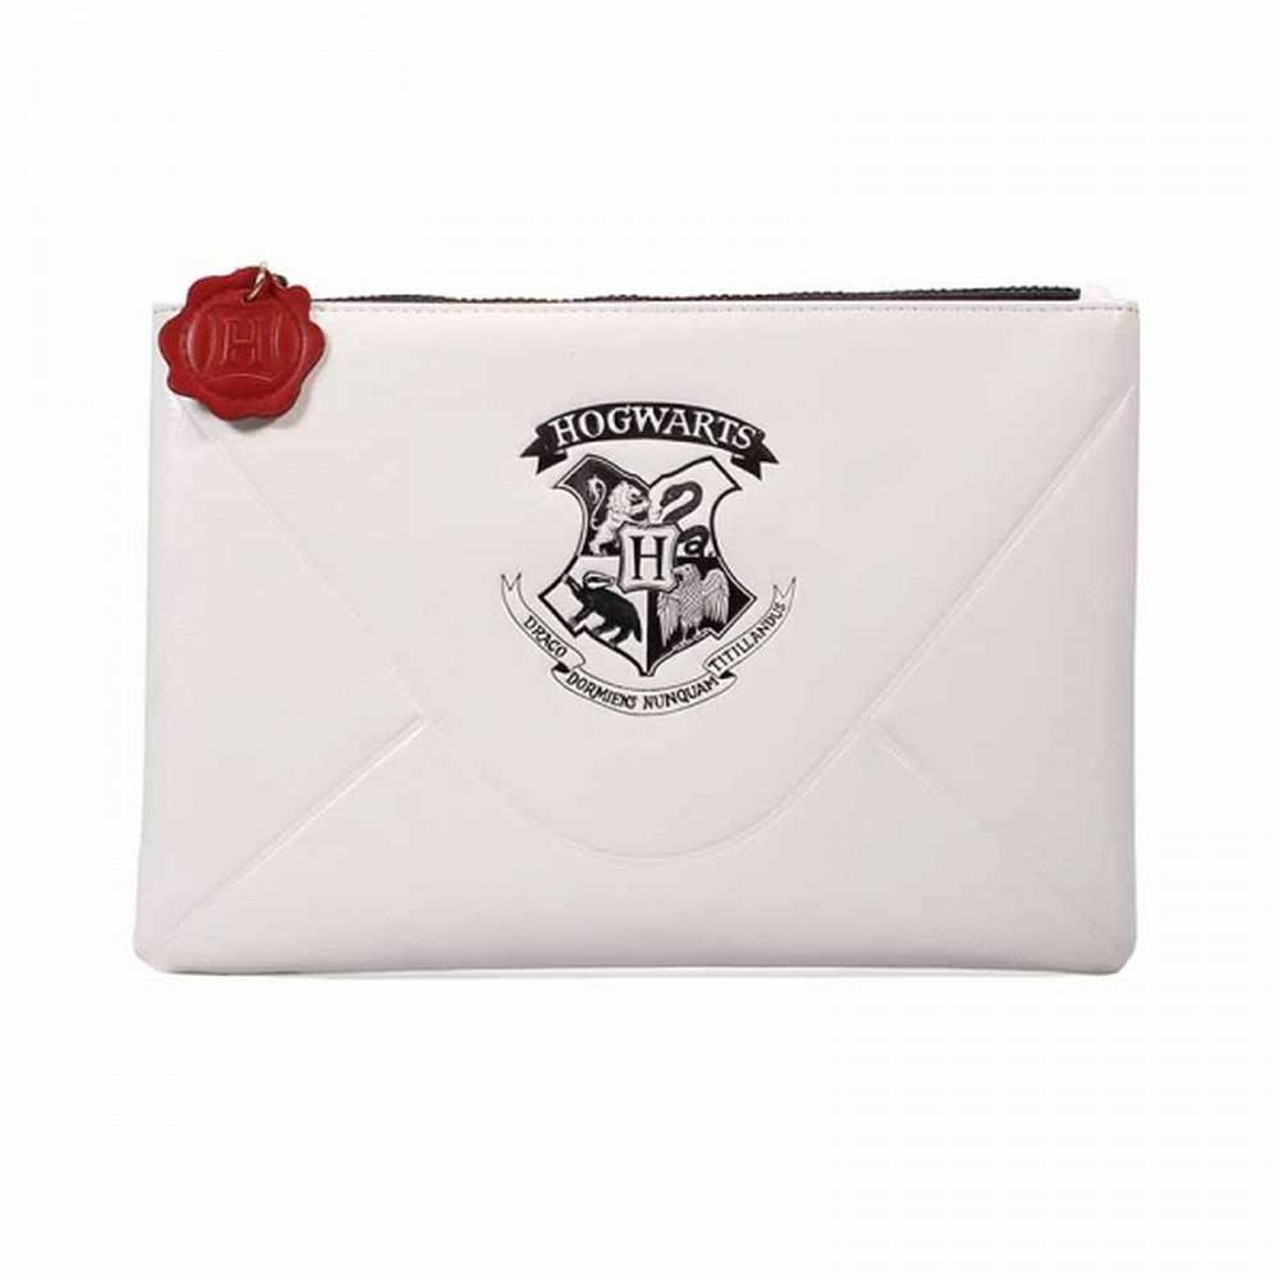 Harry Potter Gold Wand Crossbody Bag | Crossbody bag, Bags, Harry potter bag